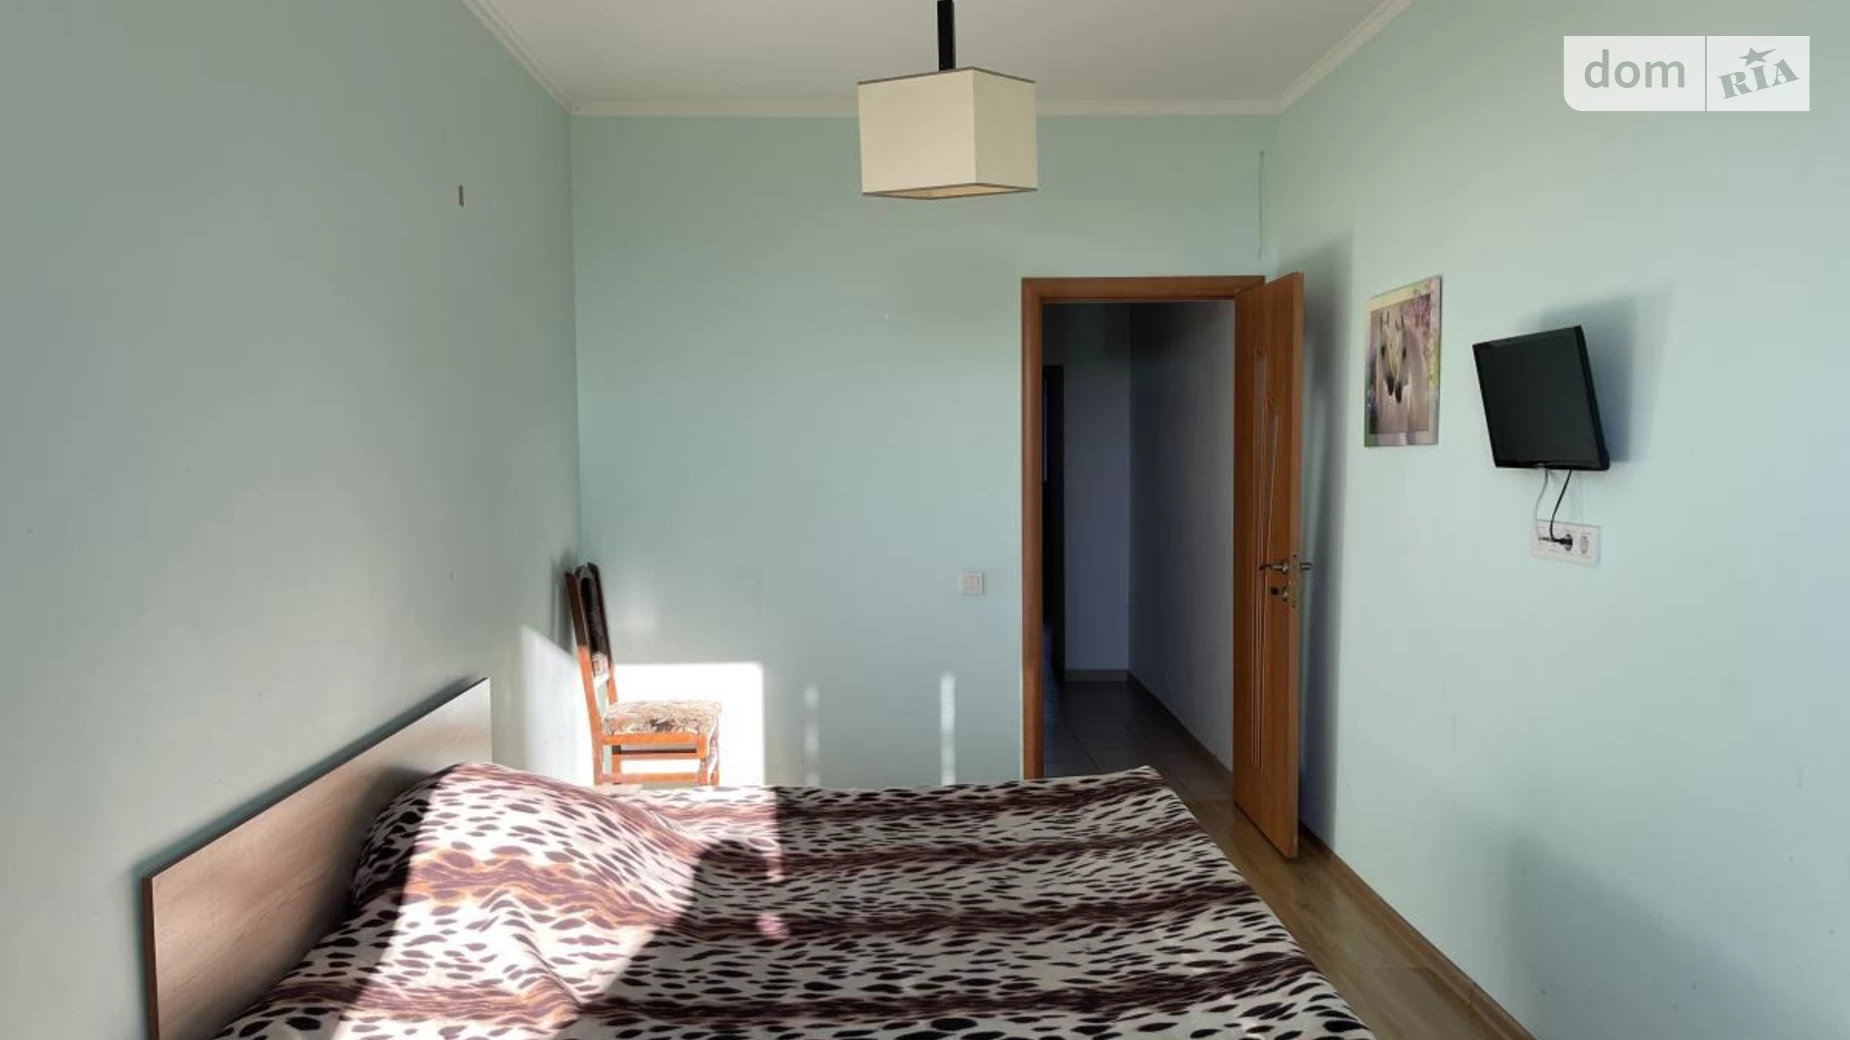 Продается 3-комнатная квартира 120.6 кв. м в Ивано-Франковске - фото 2